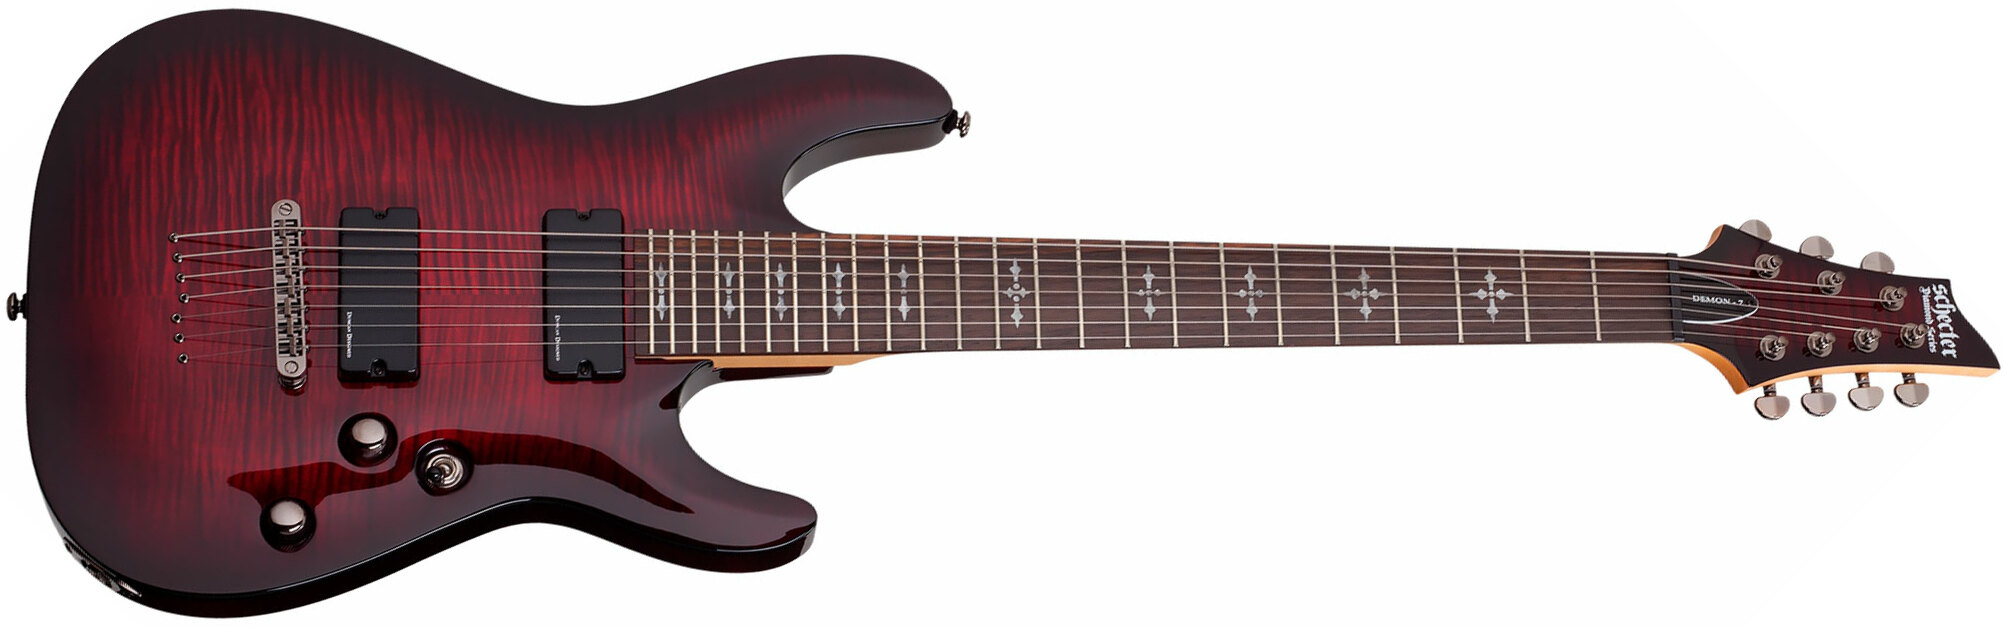 Schecter Demon-7 7c 2h Ht Wen - Crimson Red Burst - 7 string electric guitar - Main picture